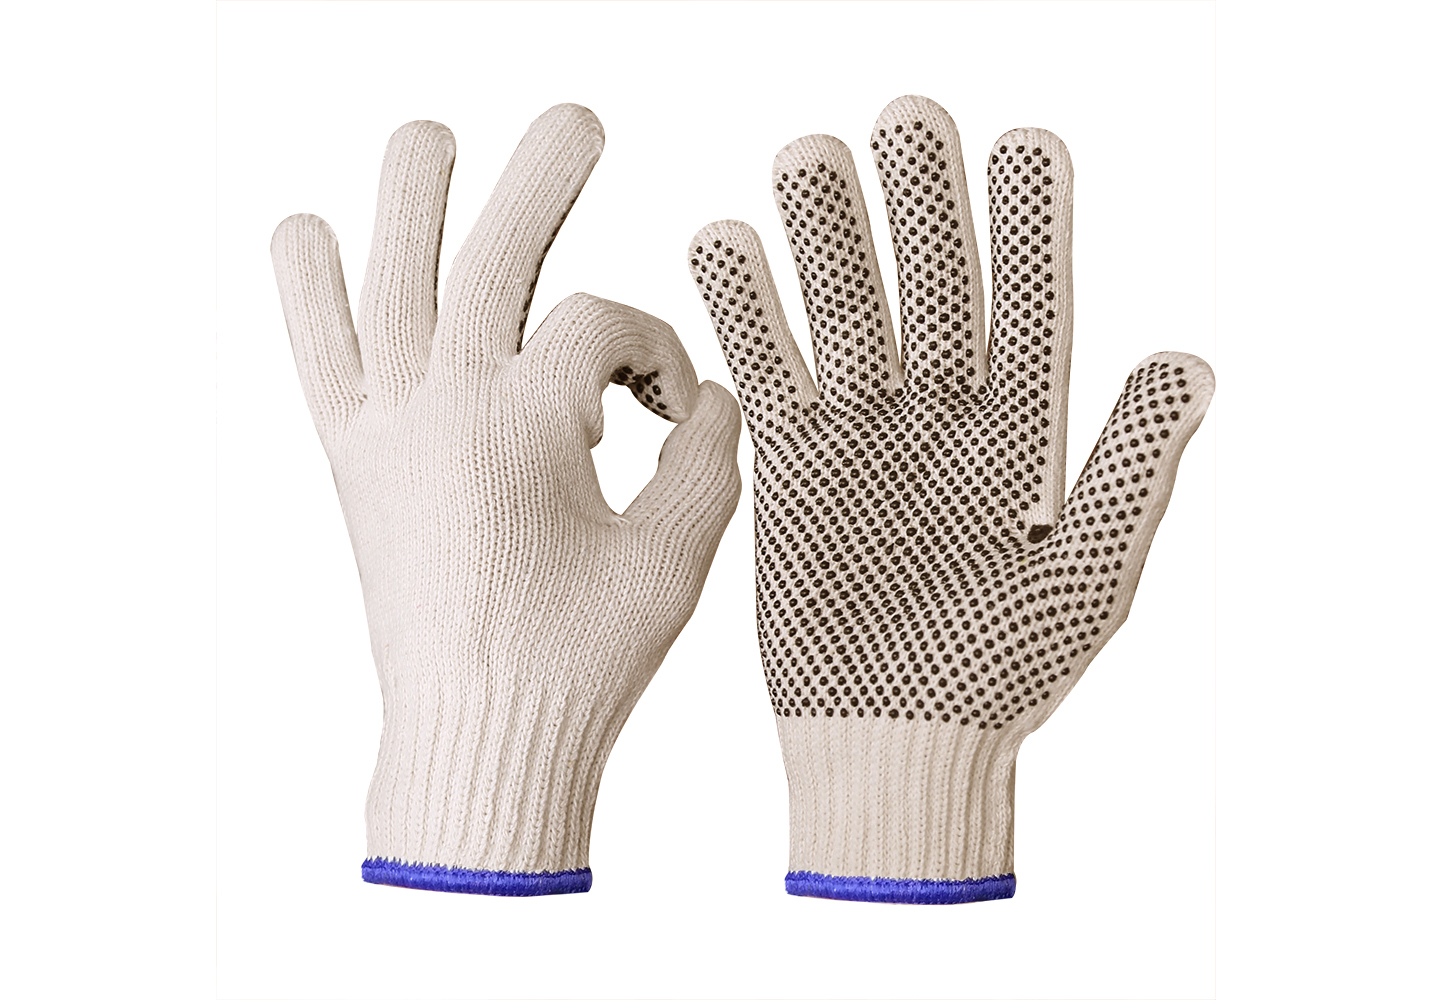 7G Lightweight String Knit Glove with PVC Dots on palm/SKG-026